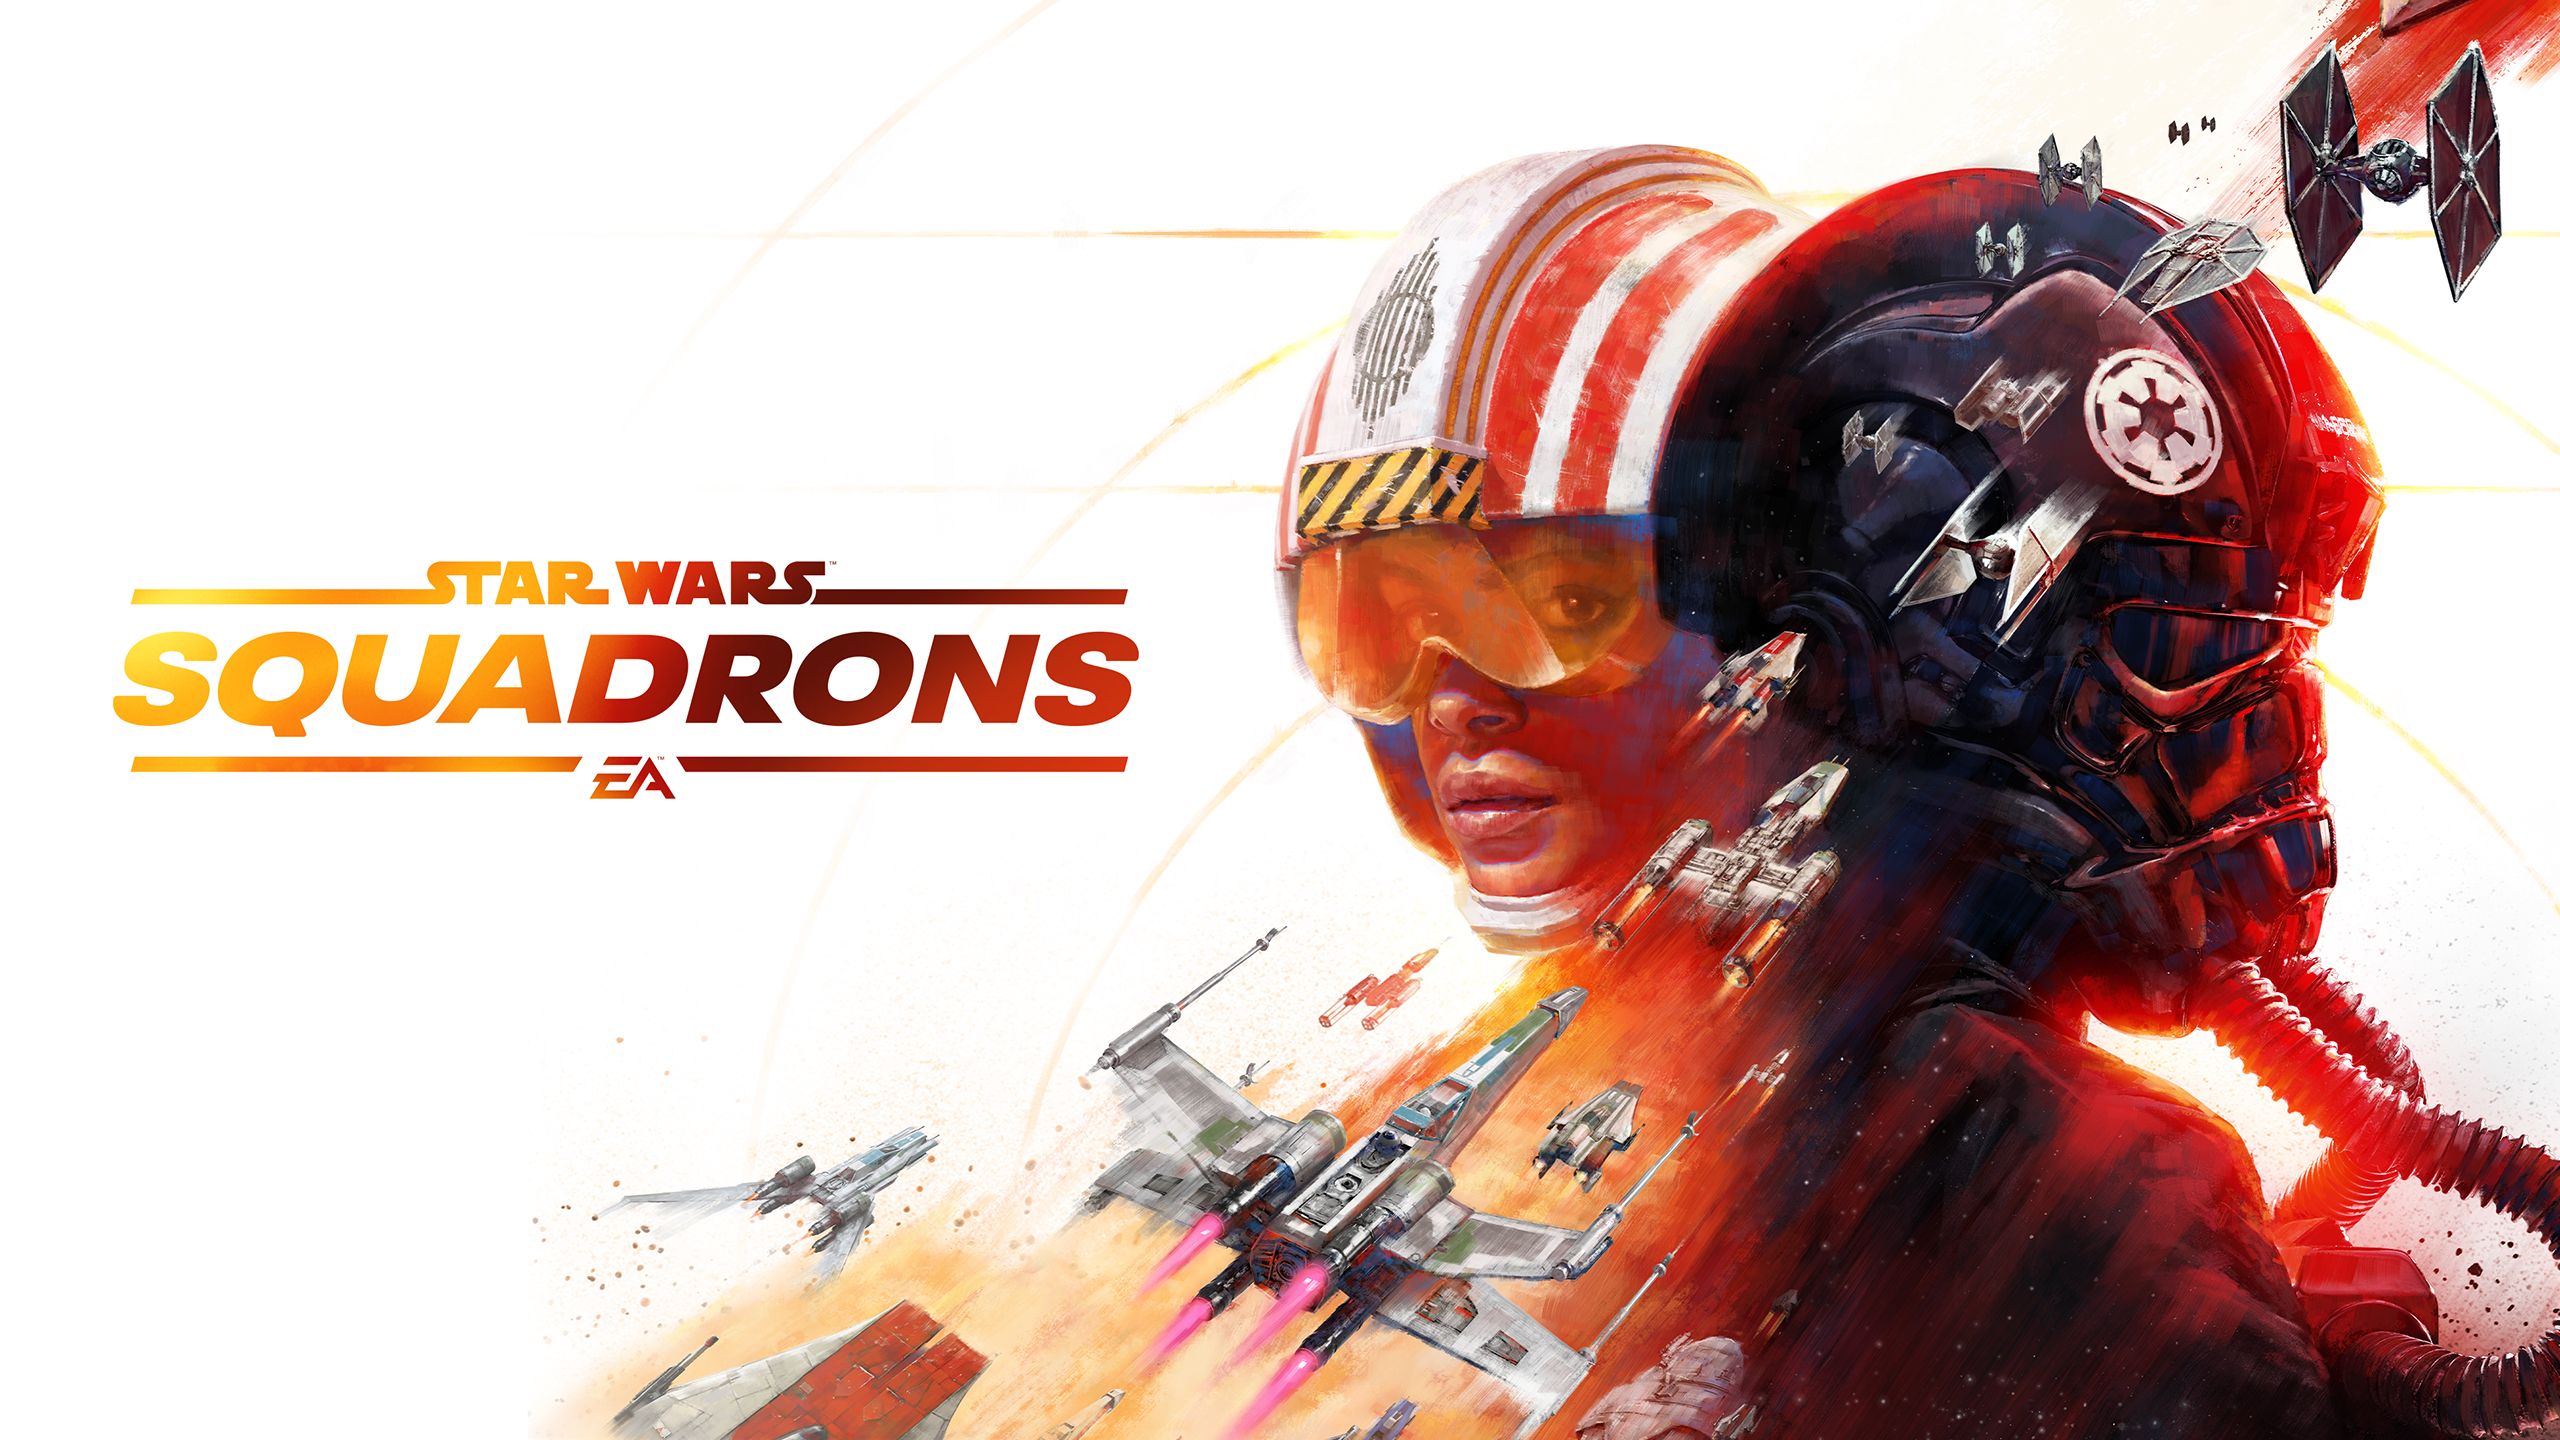 PC-n ingyenes lett a Star Wars: Squadrons